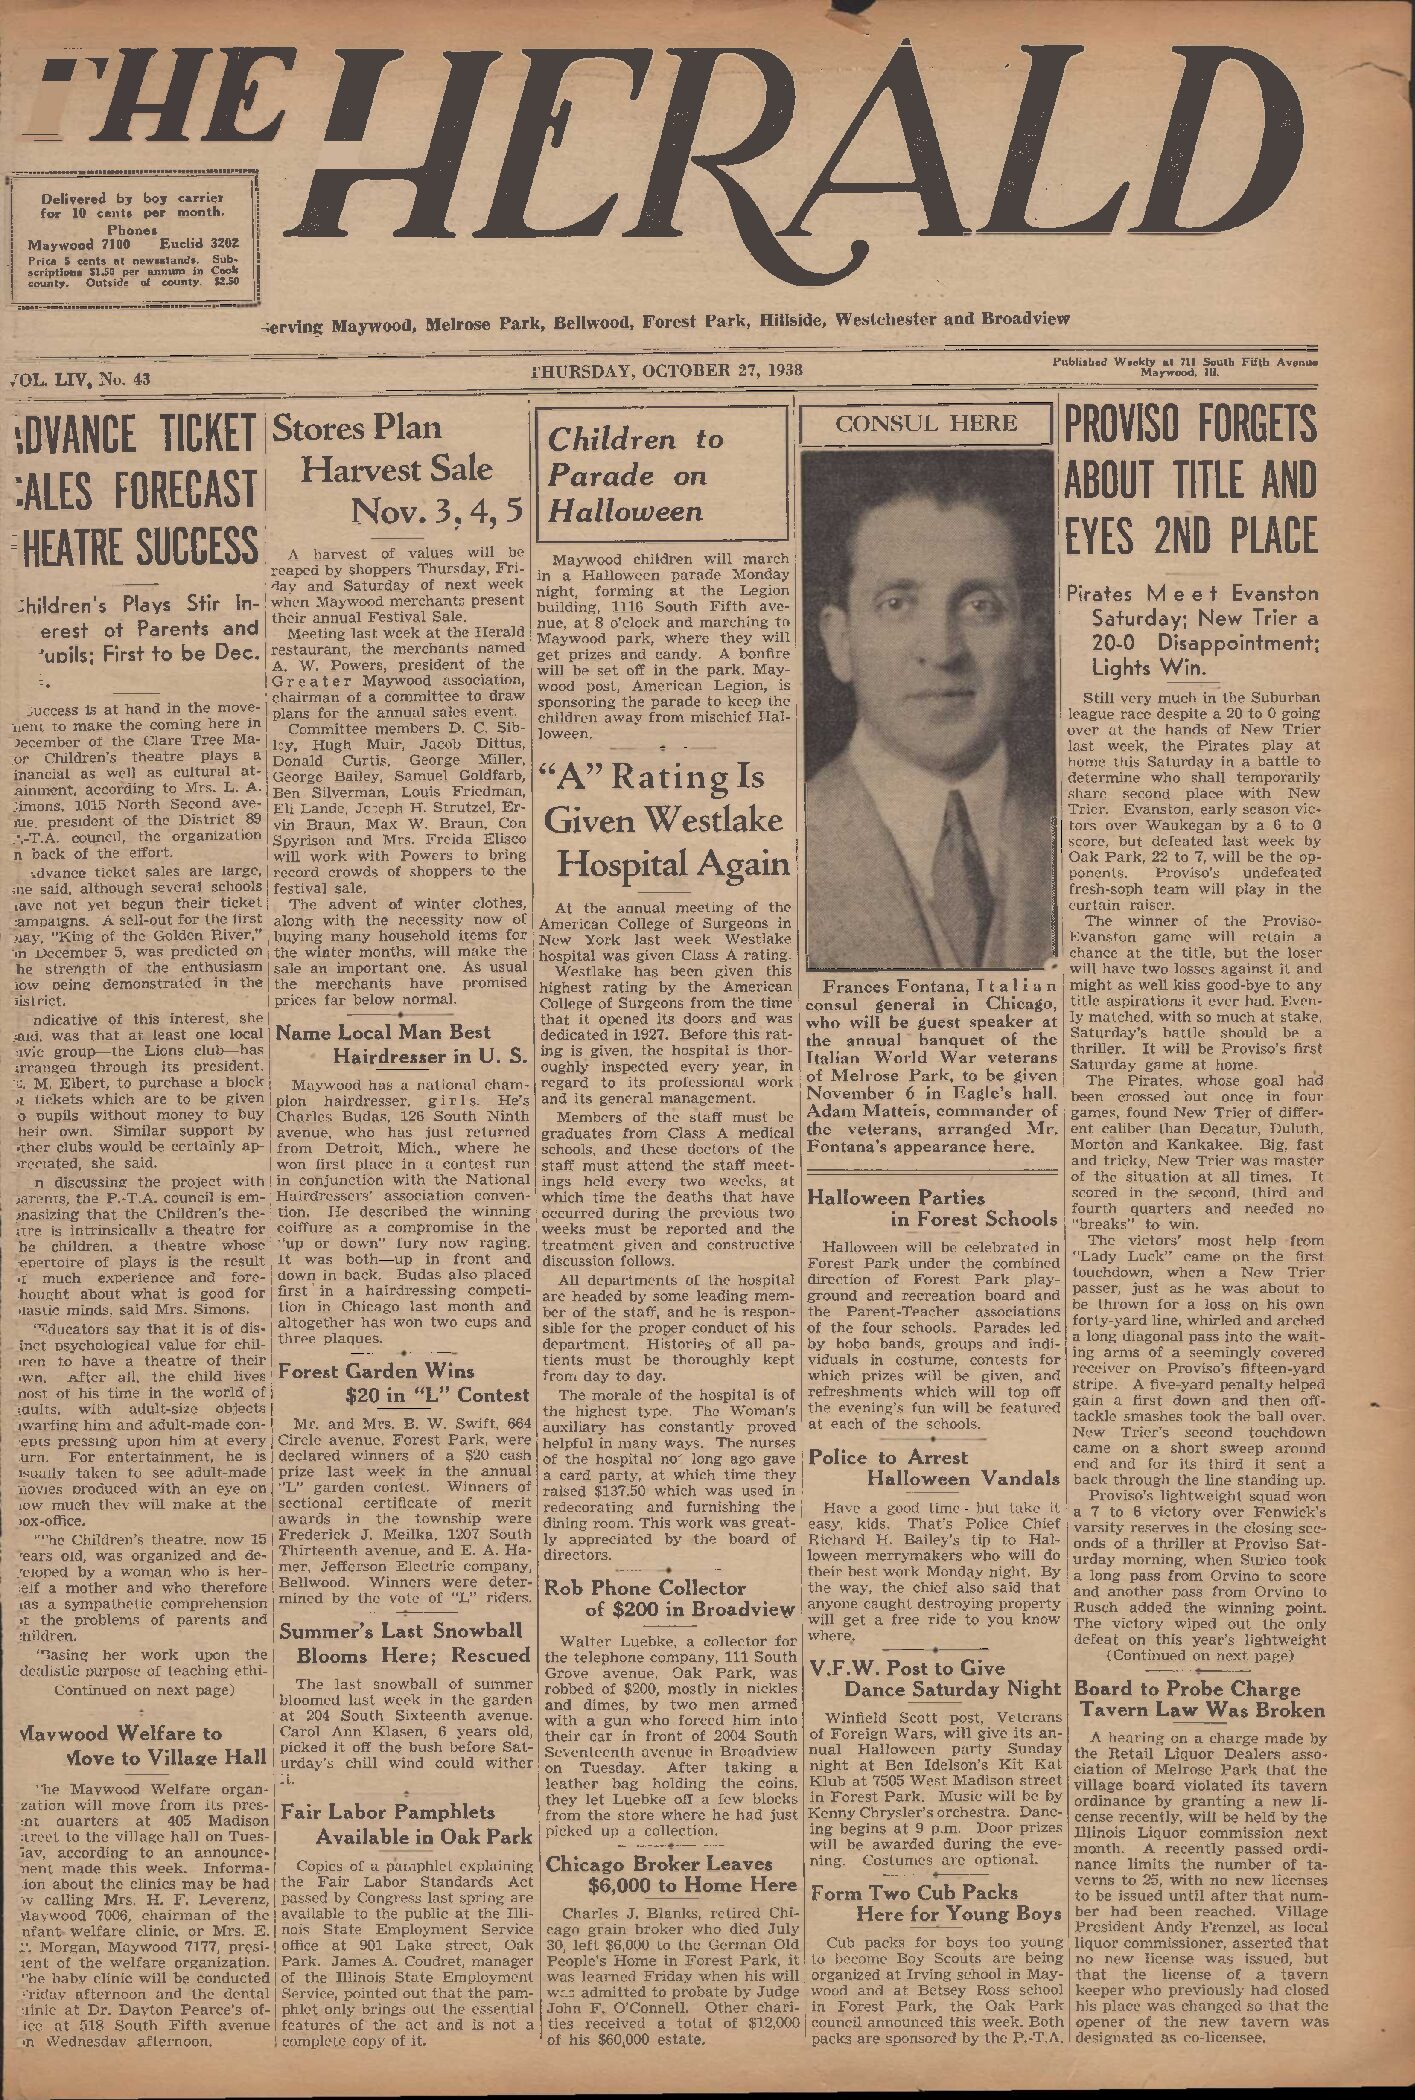 The Herald – 19381027